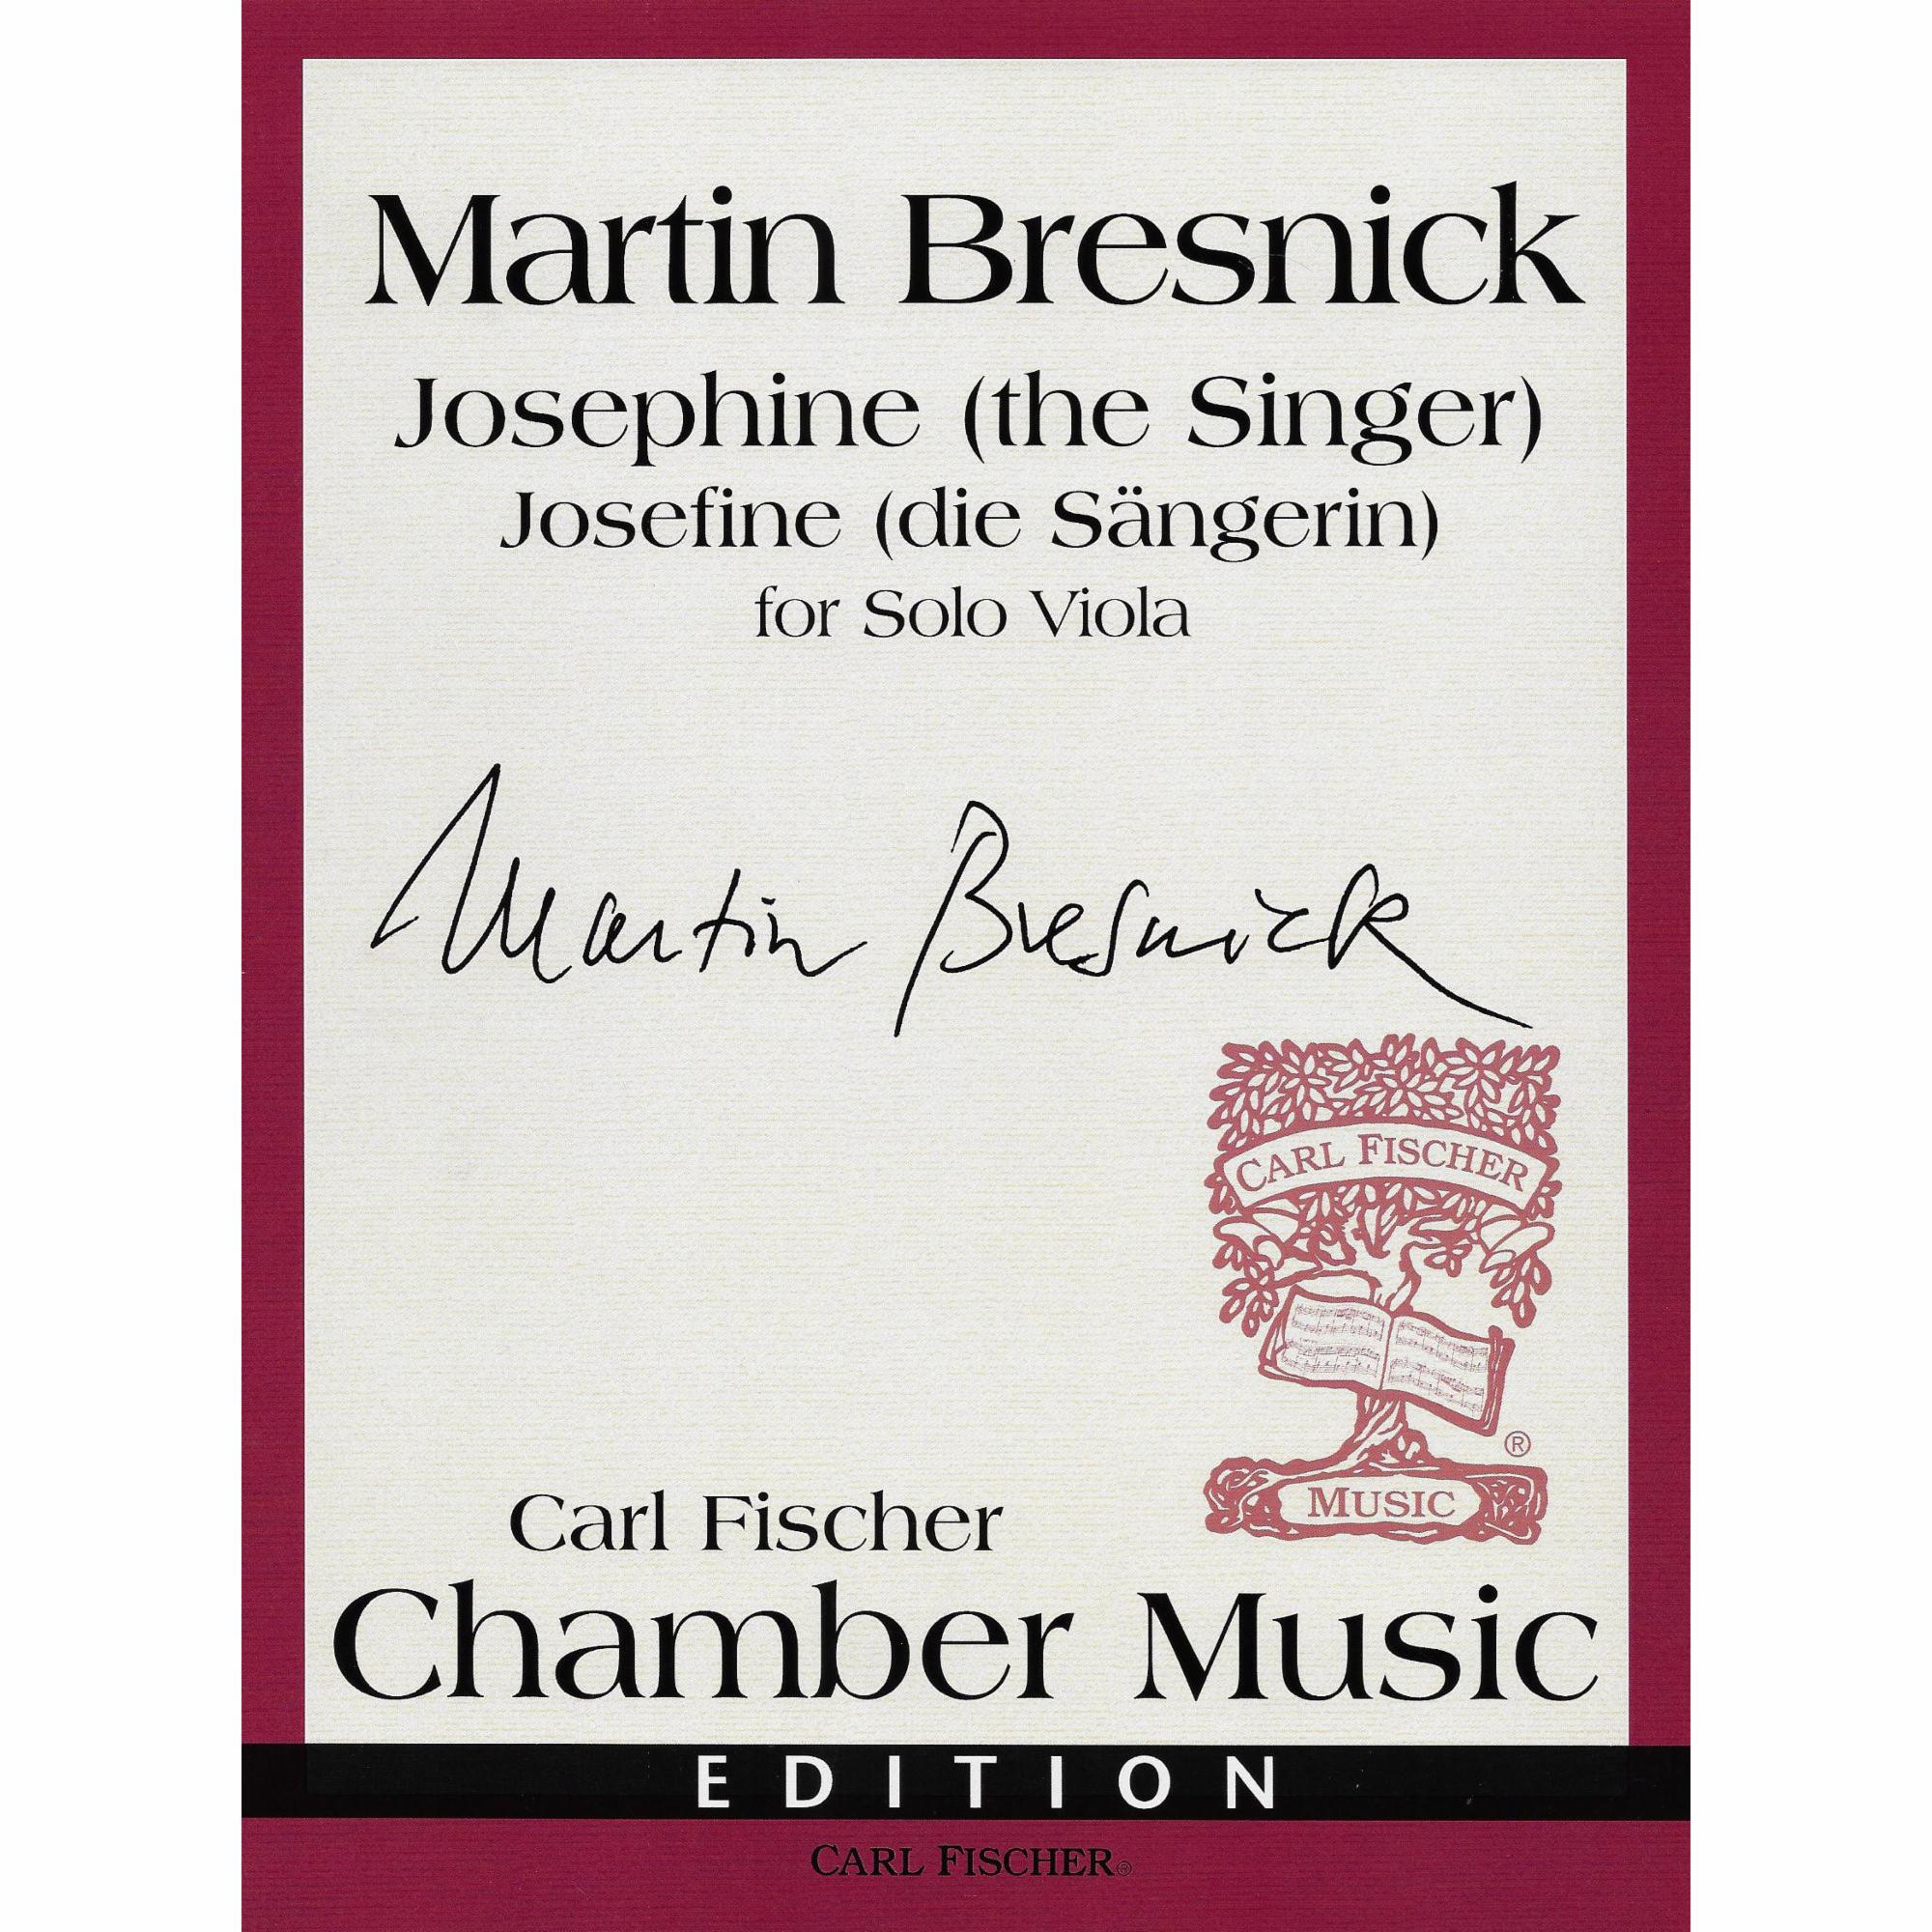 Bresnick -- Josephine the Singer for Solo Viola